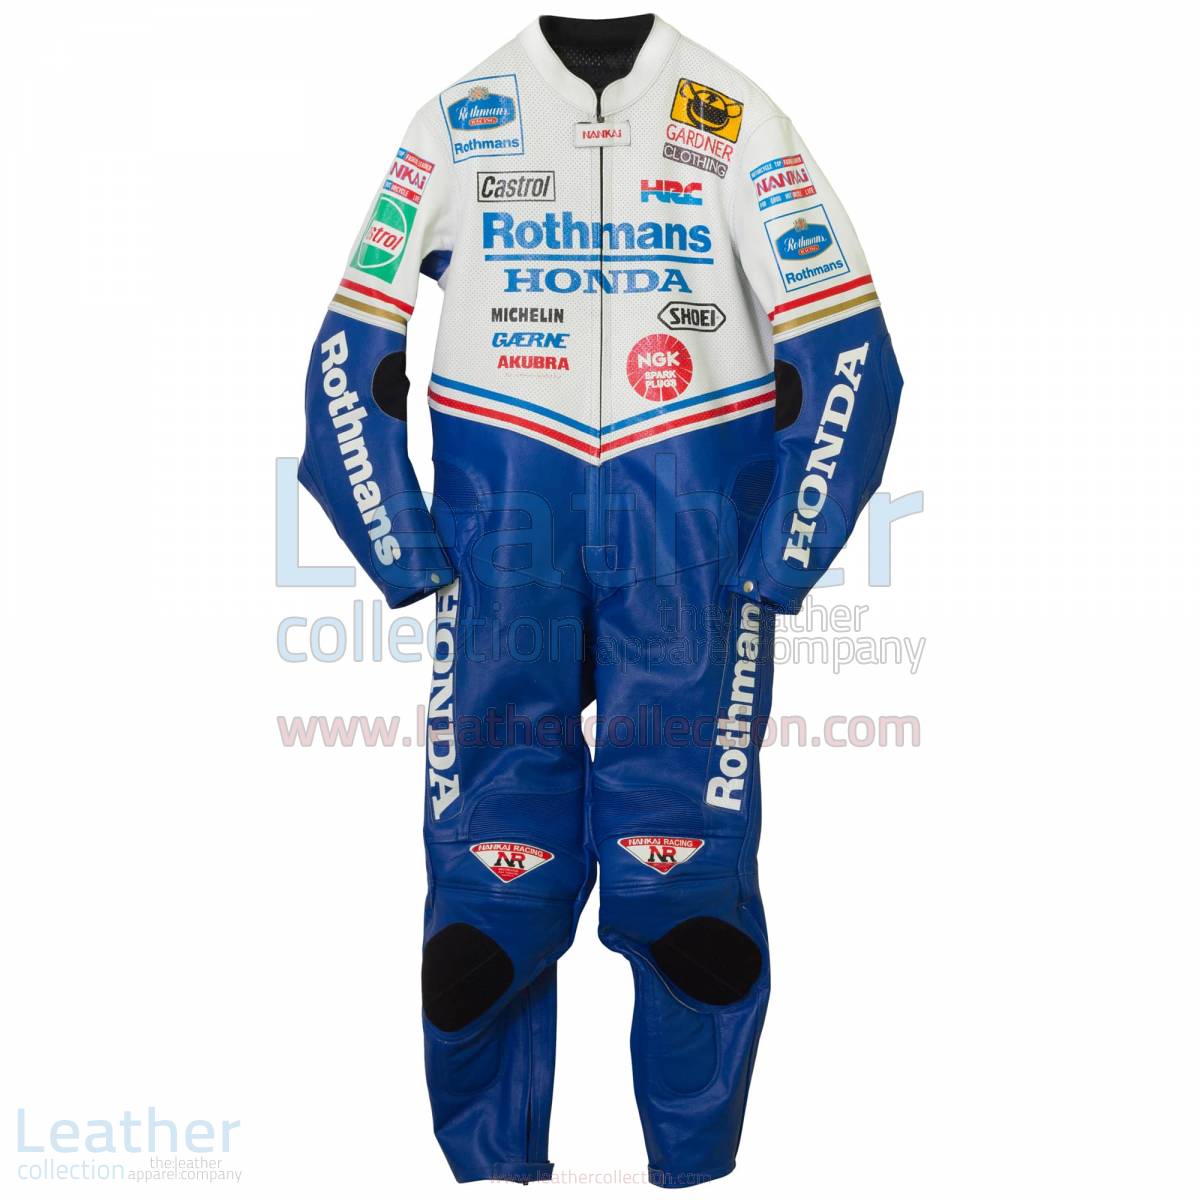 Wayne Gardner Rothmans Honda GP 1992 Leathers